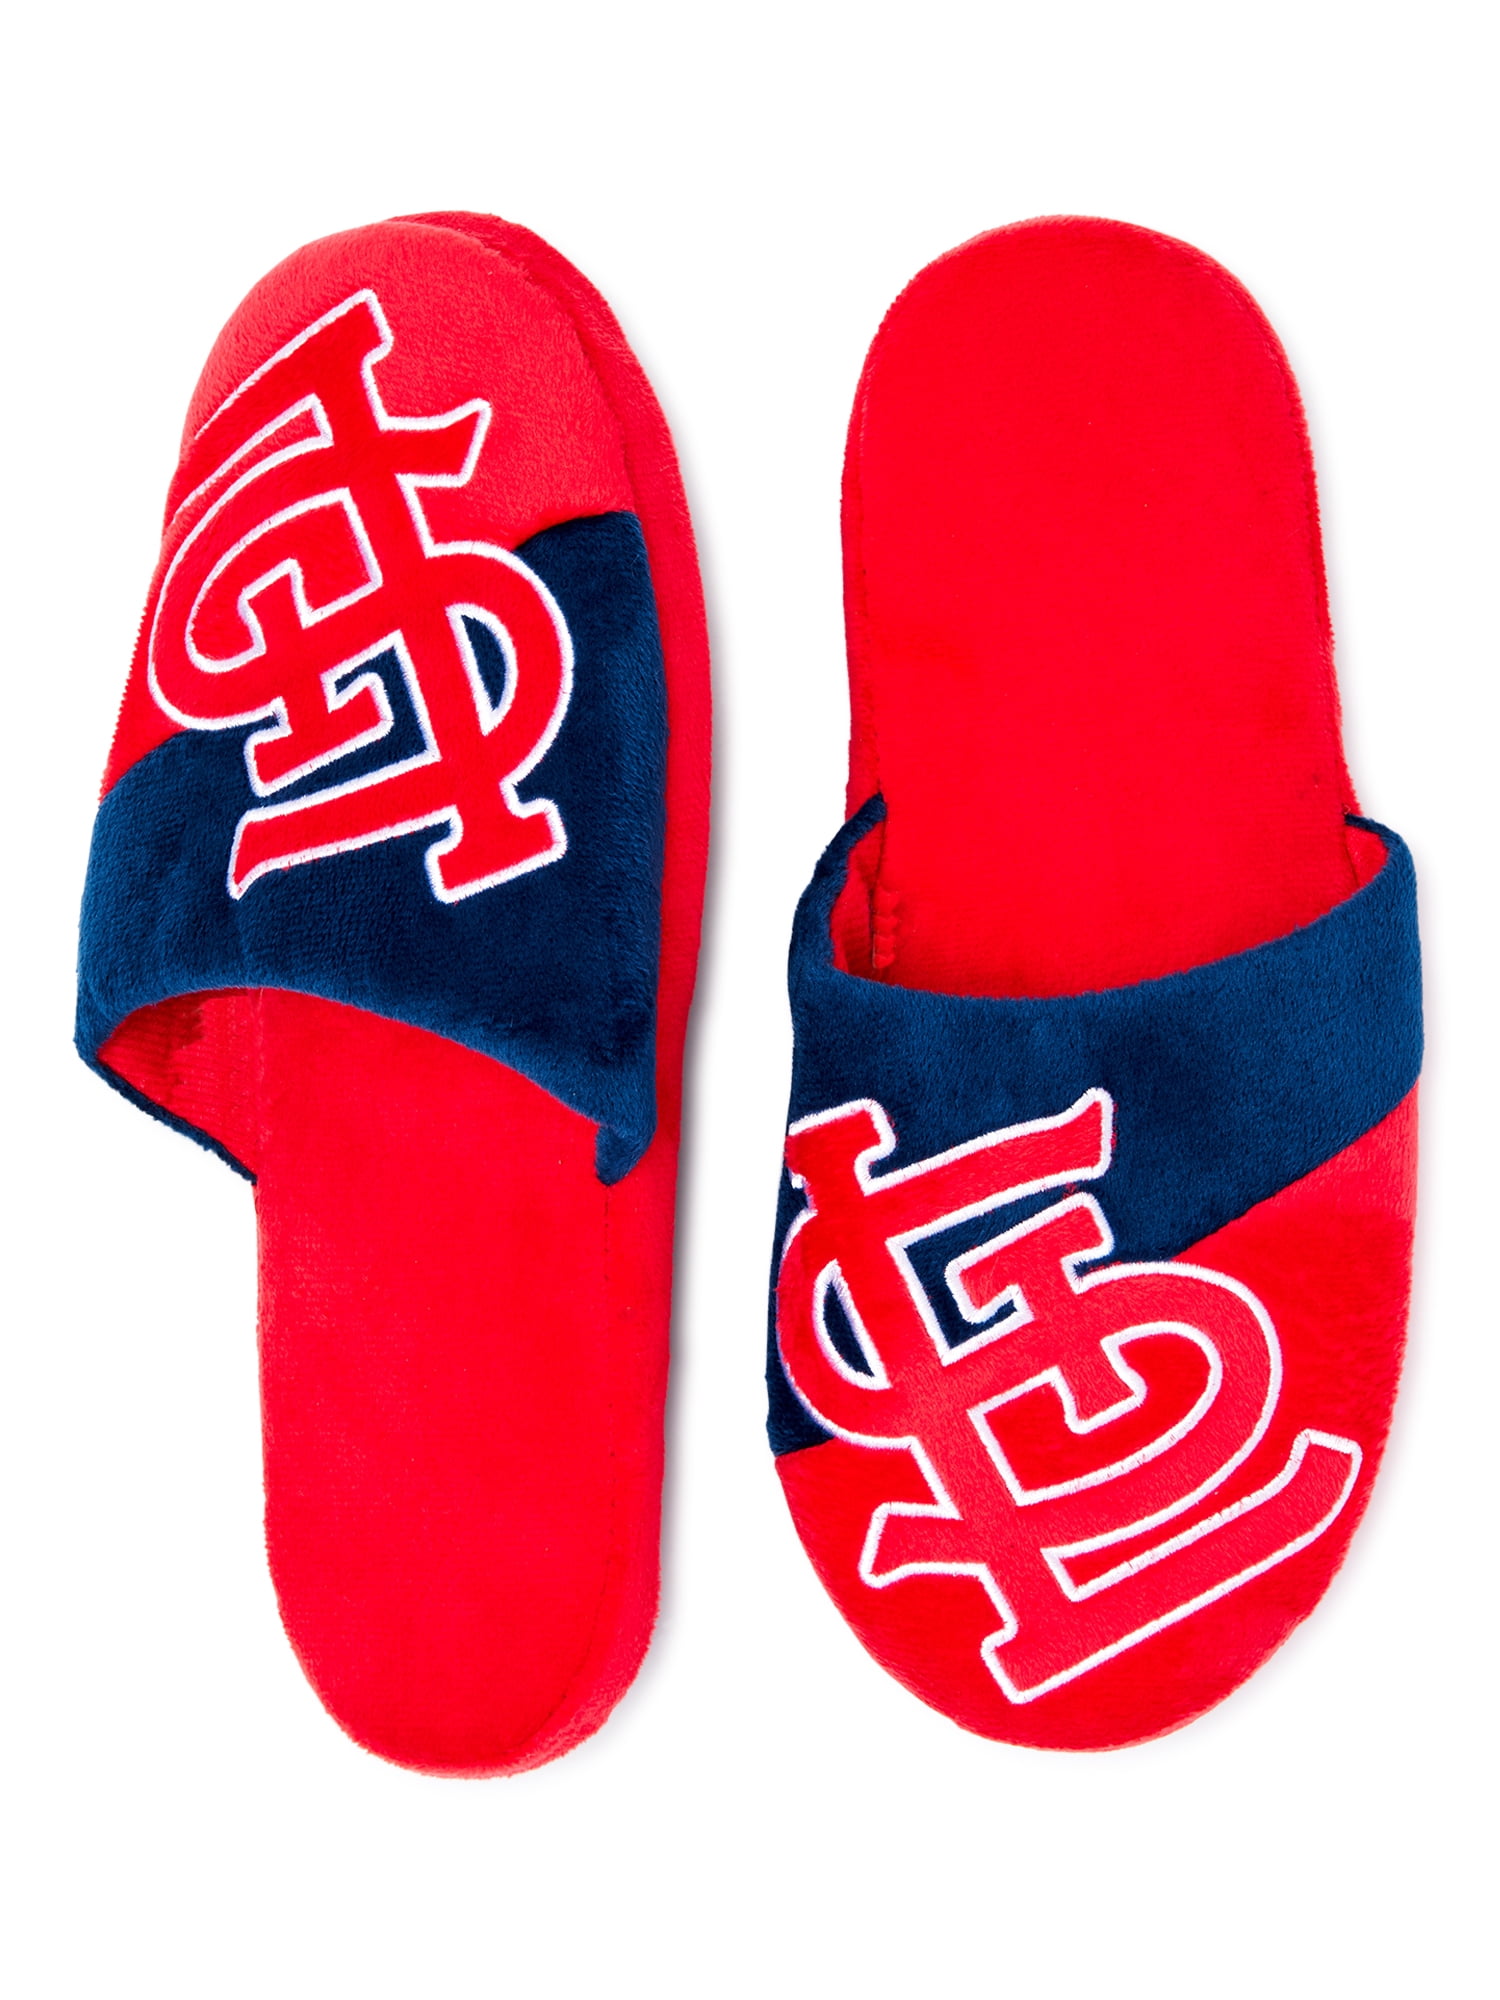 cardinal bird slippers